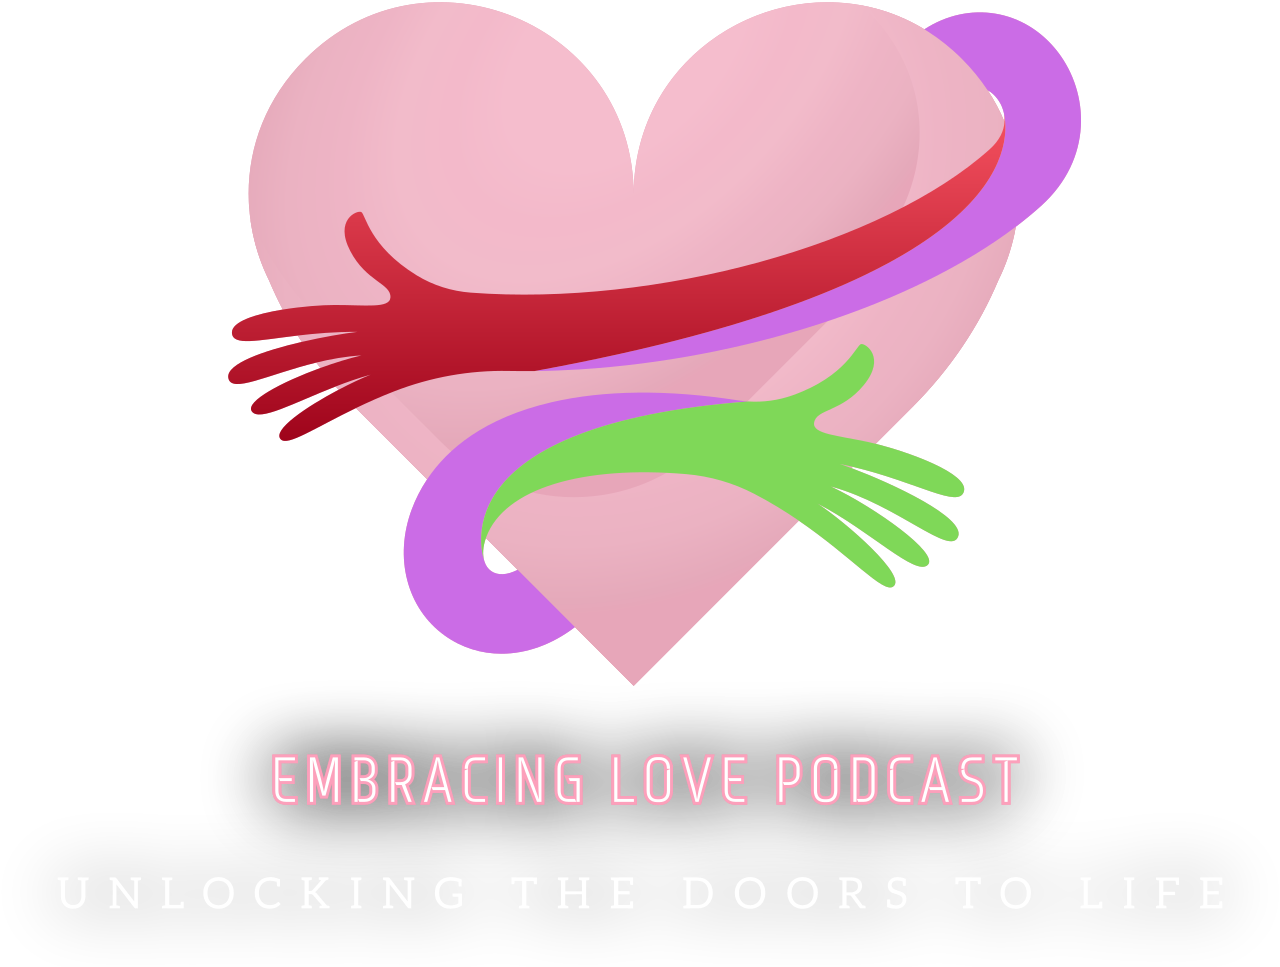 Embracing Love Podcast 's logo